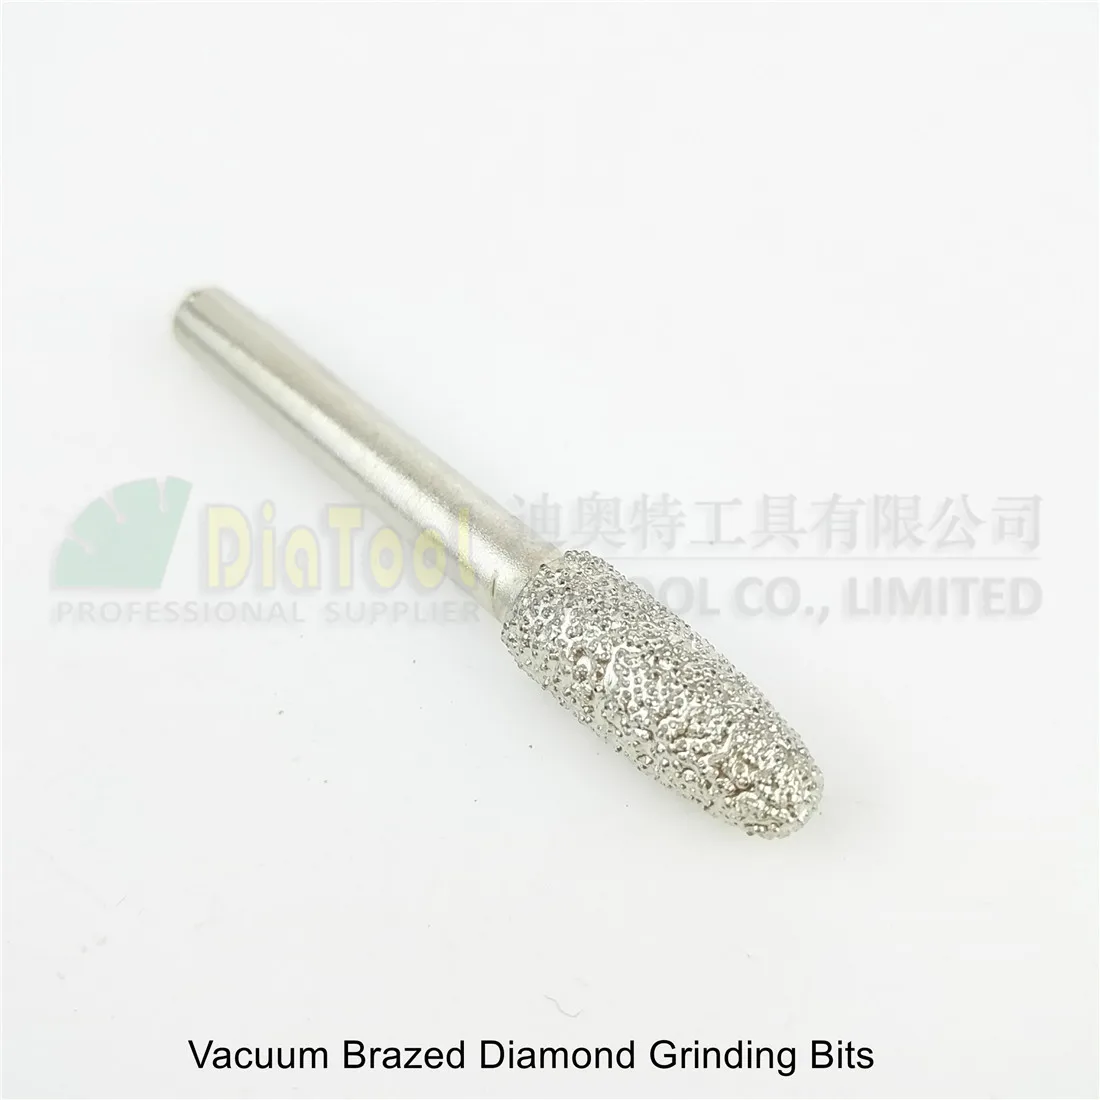 DIATOOL 5pcs #15 Vacuum Brazed Diamond Grinding Bits Mounted Points 6mm Shank 8X20mm Burrs Engraving